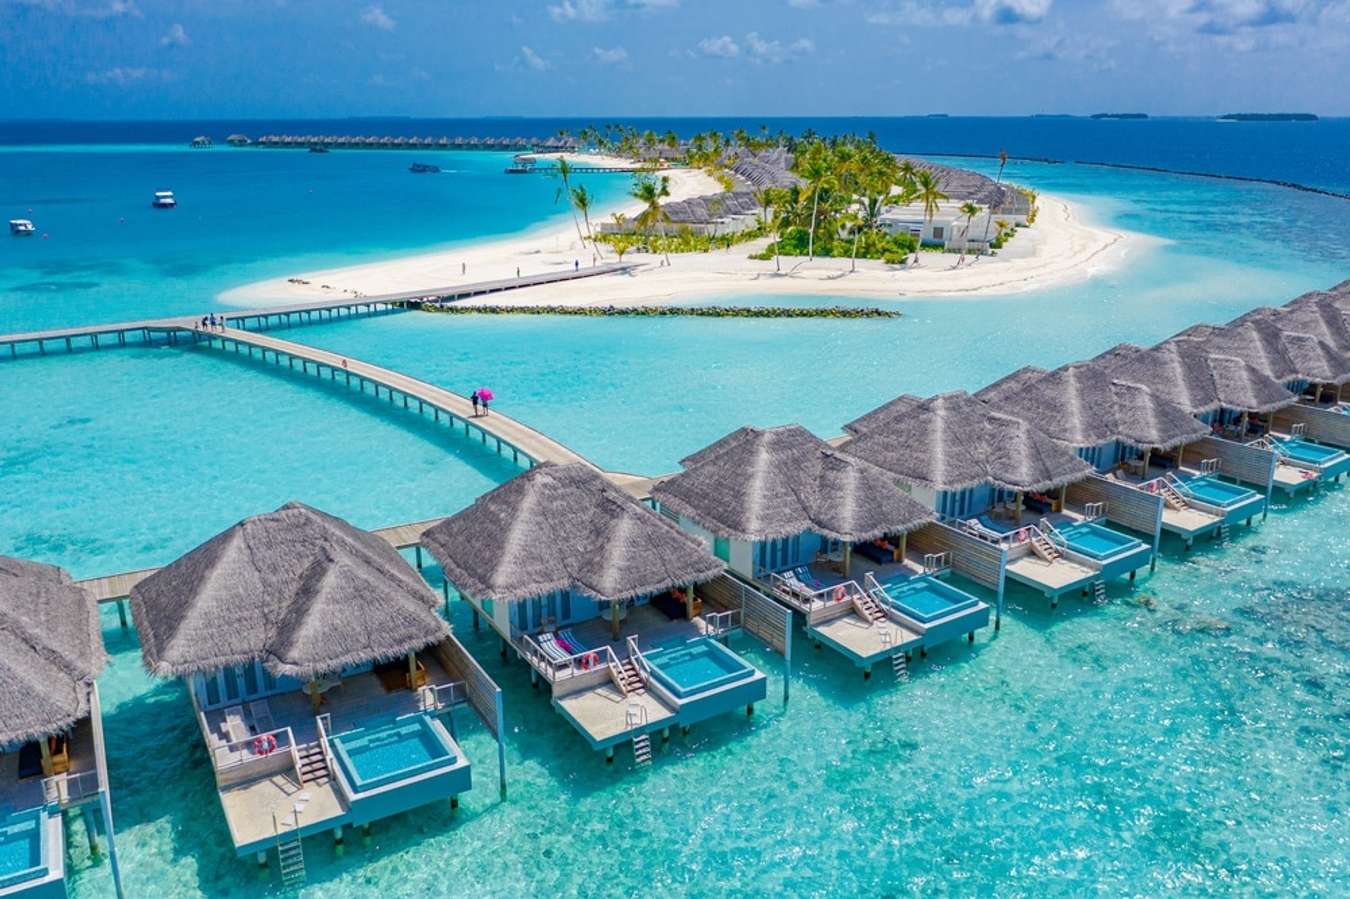 Places like maldives